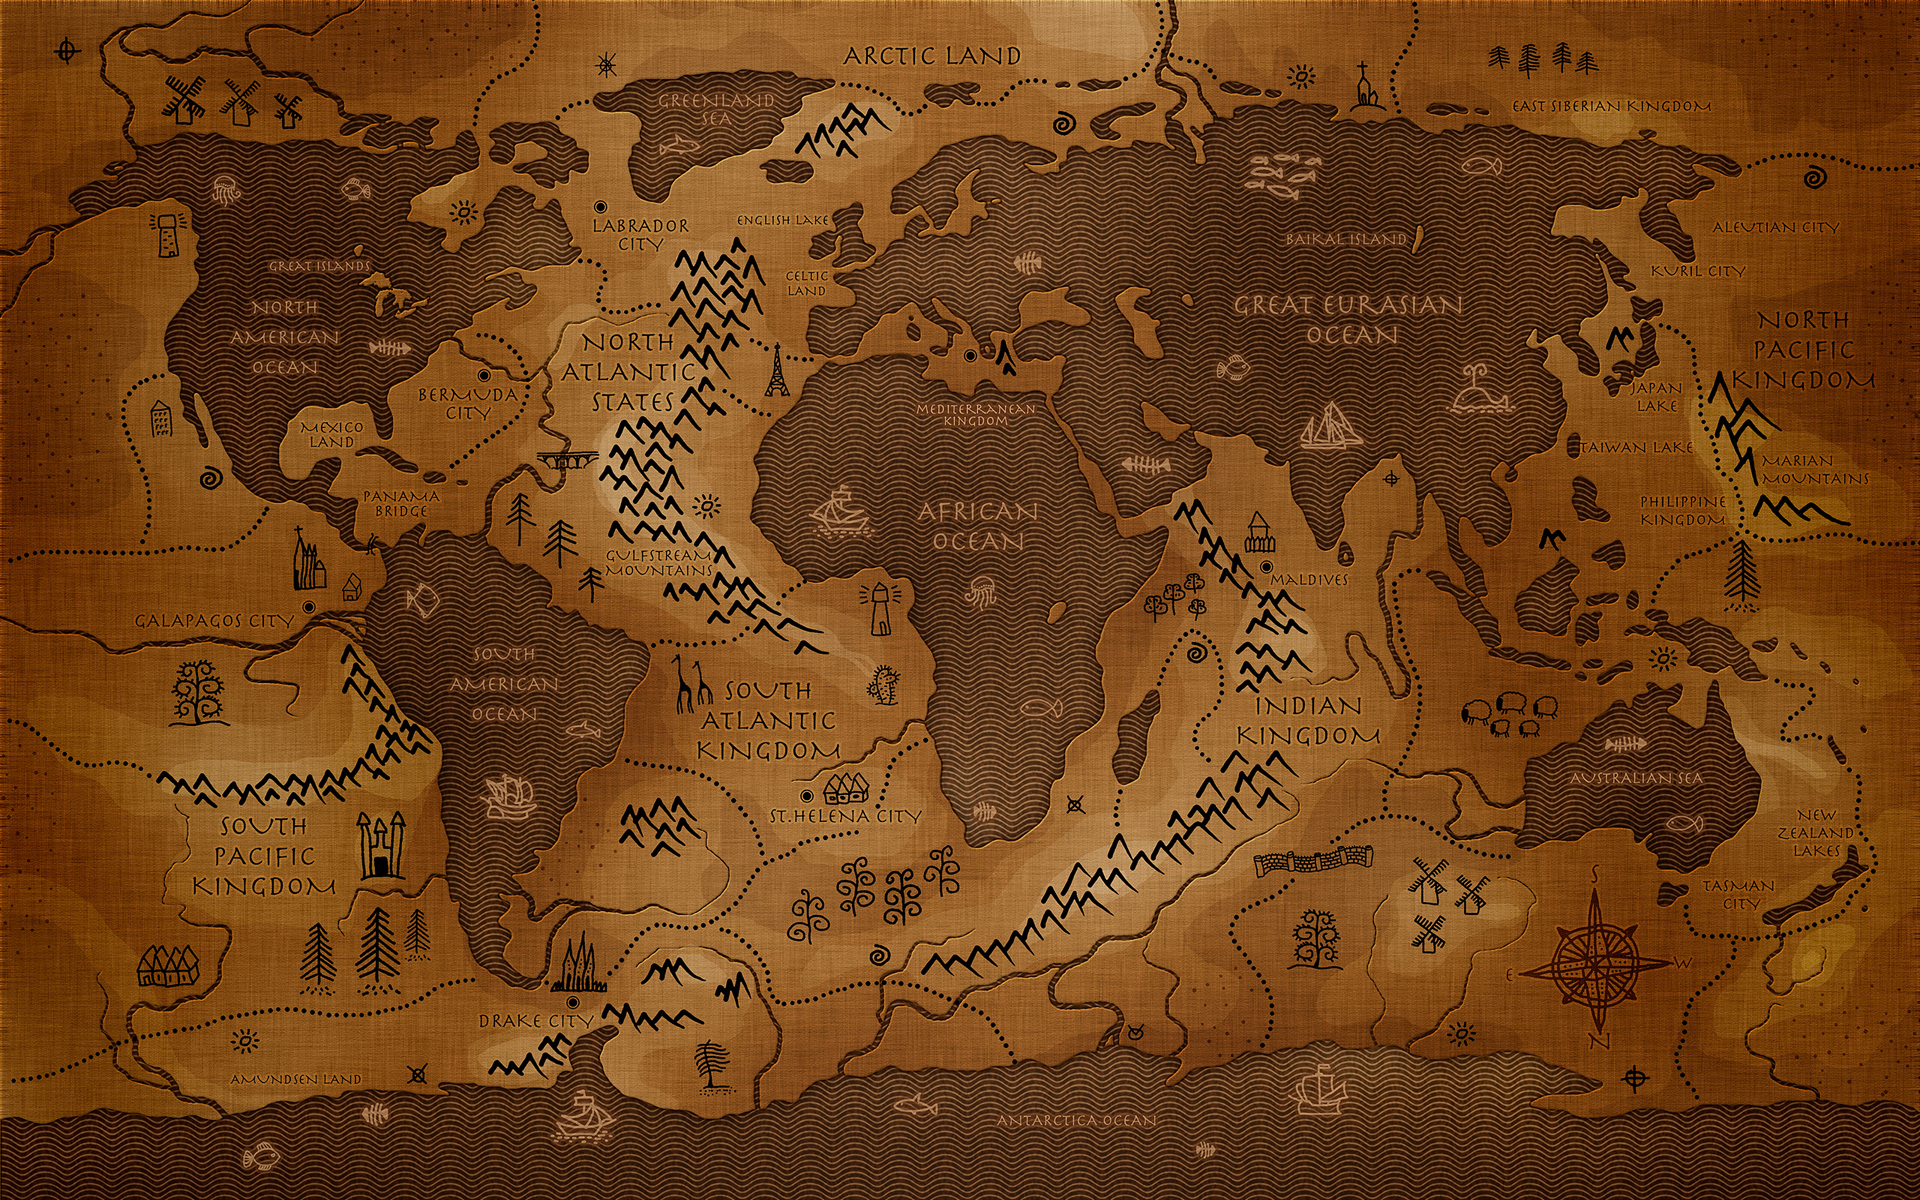 Antique World Map Wallpaper - WallpaperSafari